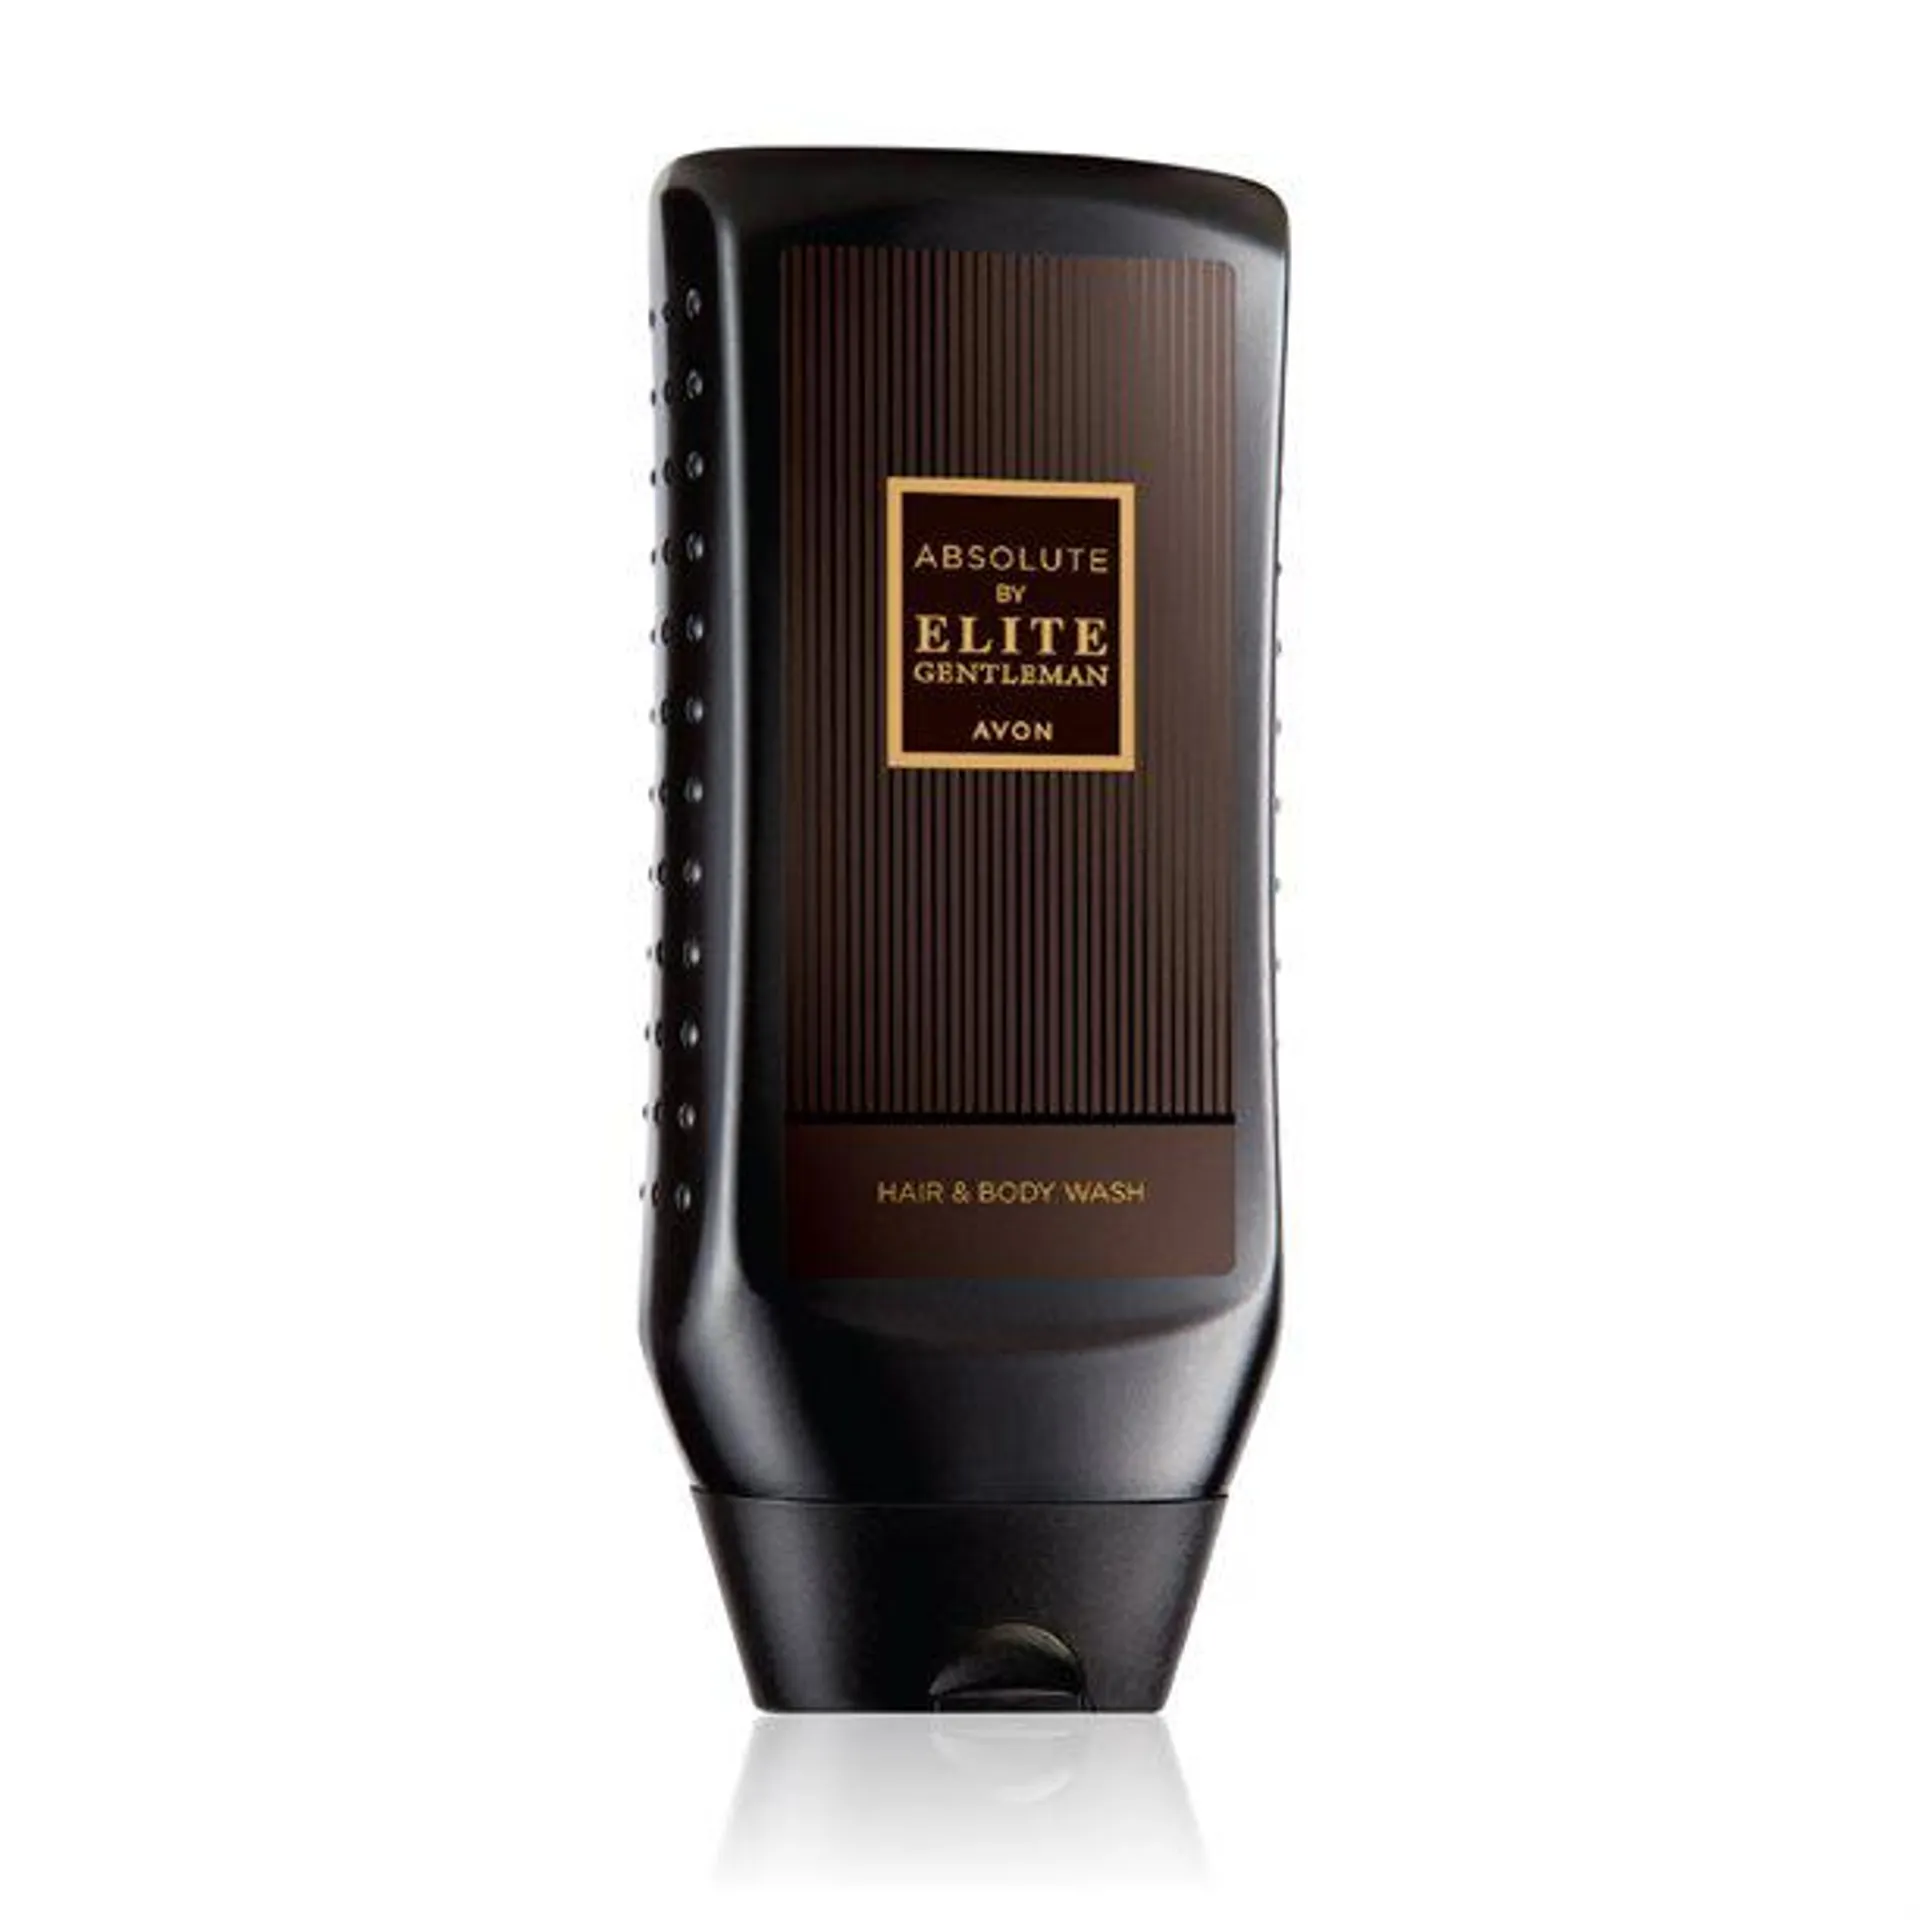 Avon Absolute By Elite Gentleman Saç ve Vücut Şampuanı 250 ml